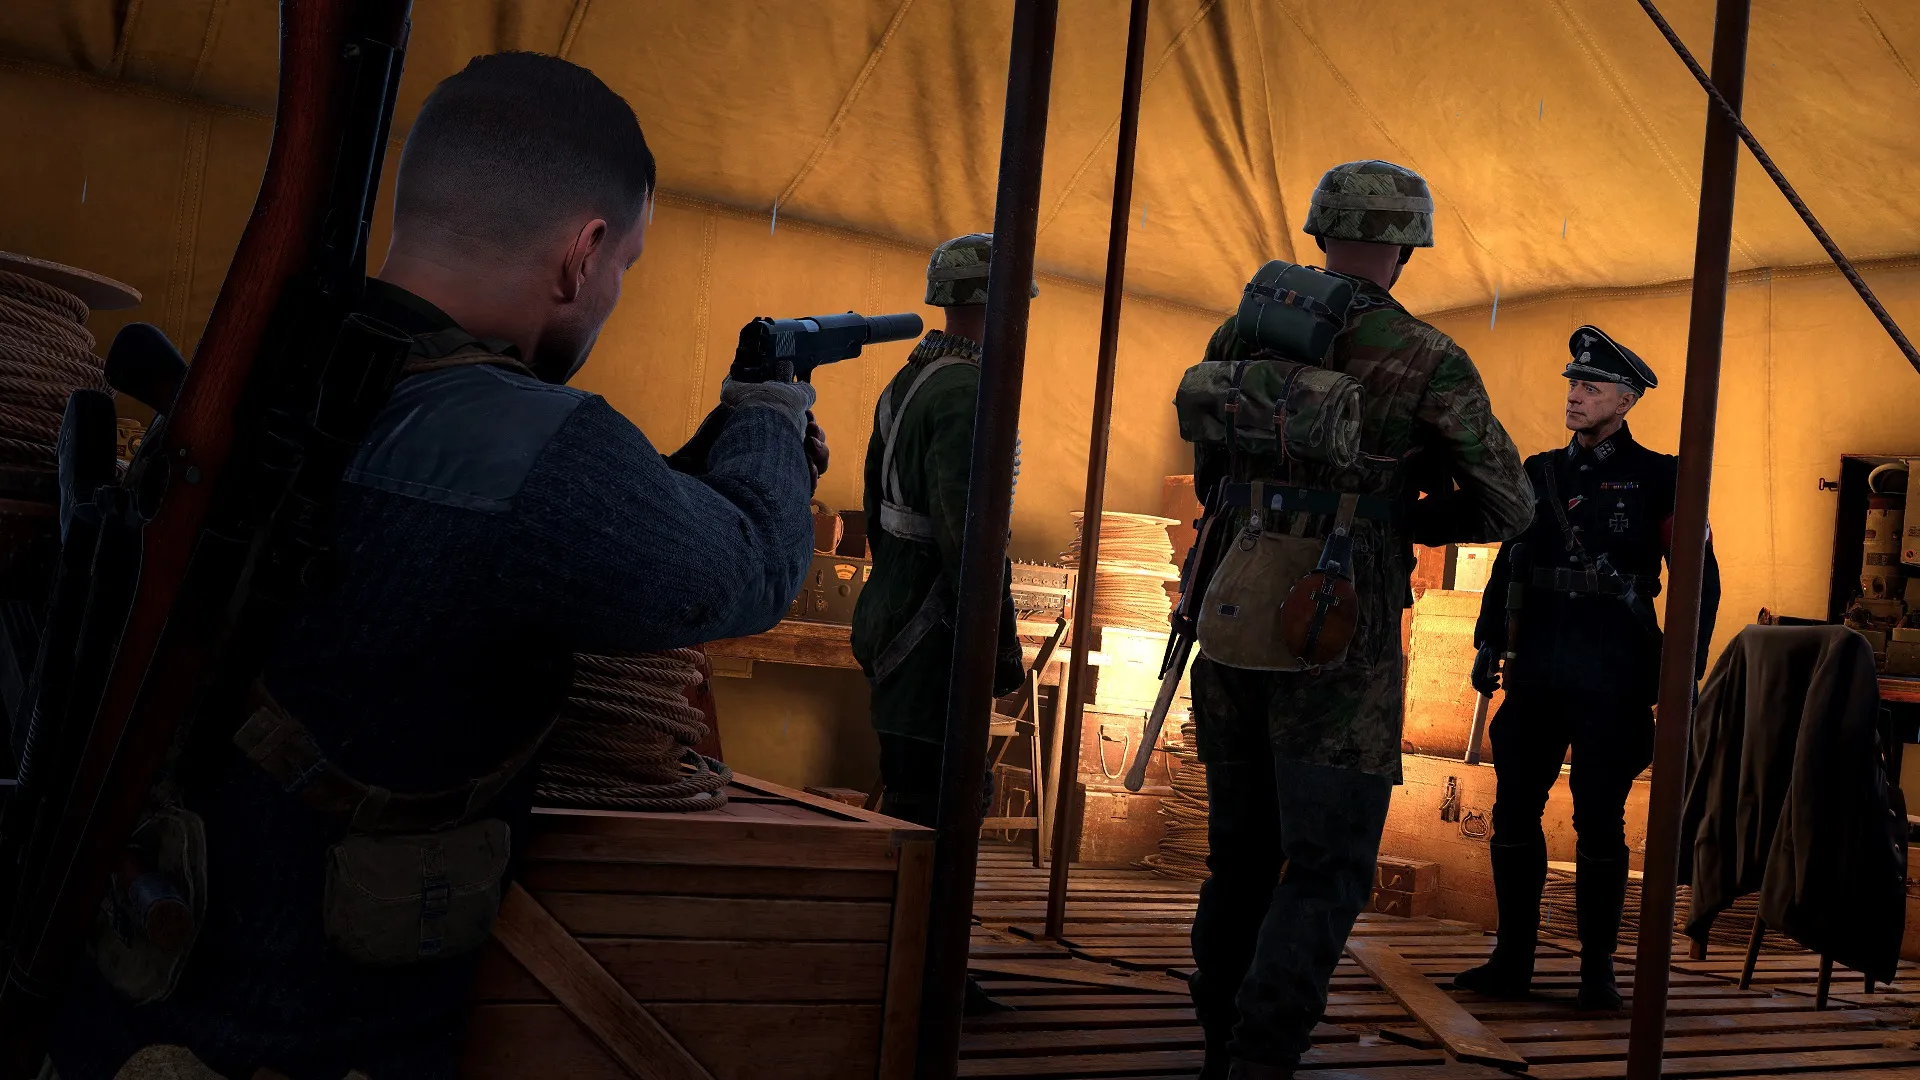 Explore ‘The Art of Stealth’ in Sniper Elite 5